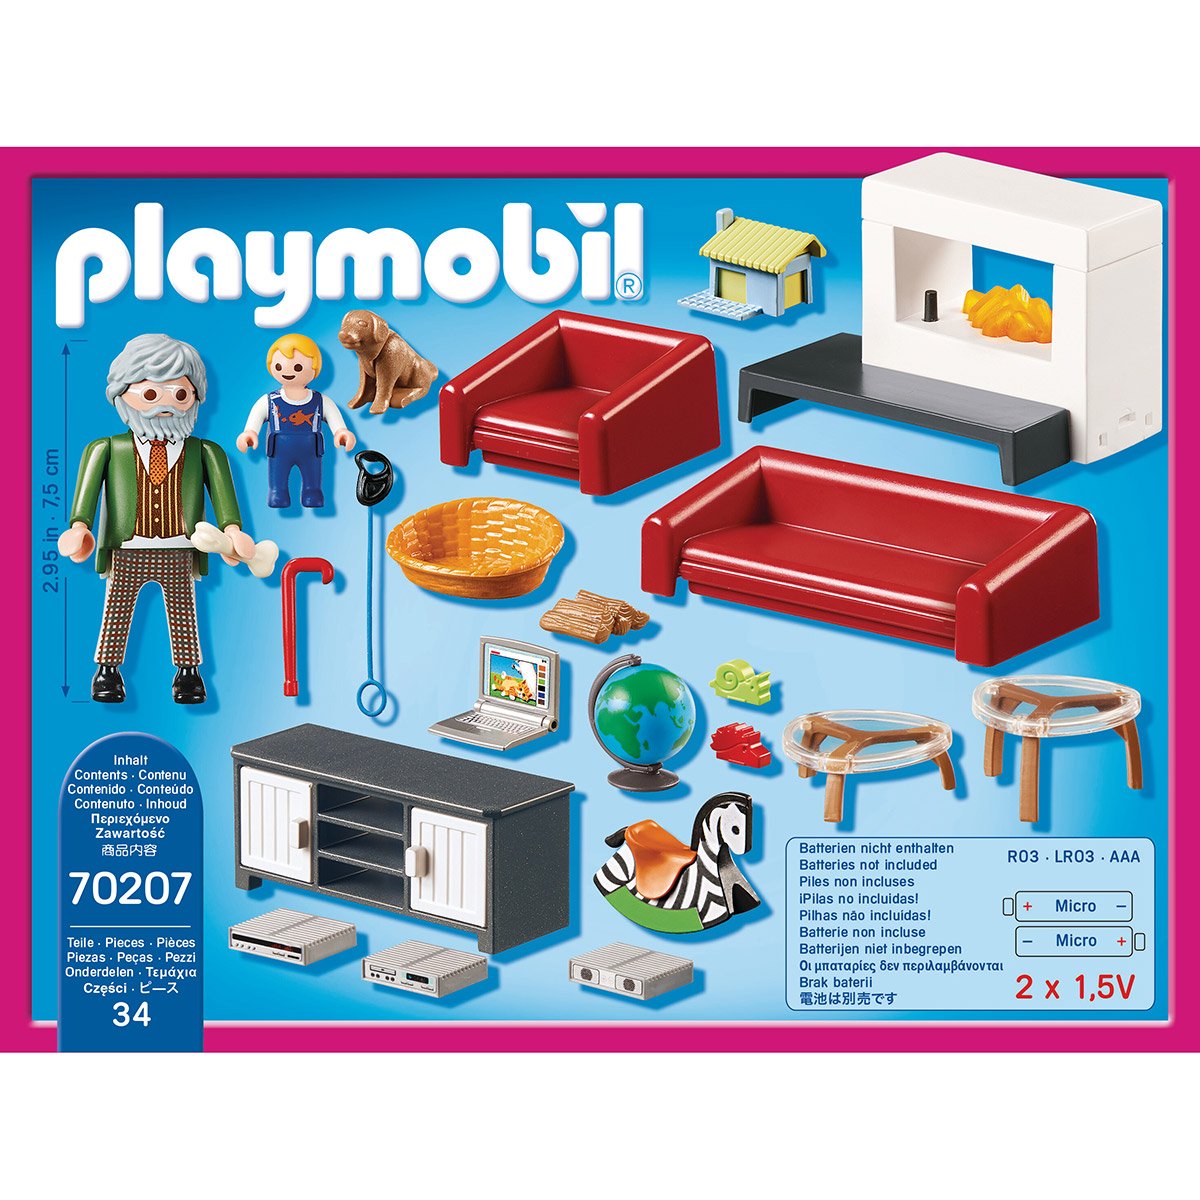 dollhouse playmobil